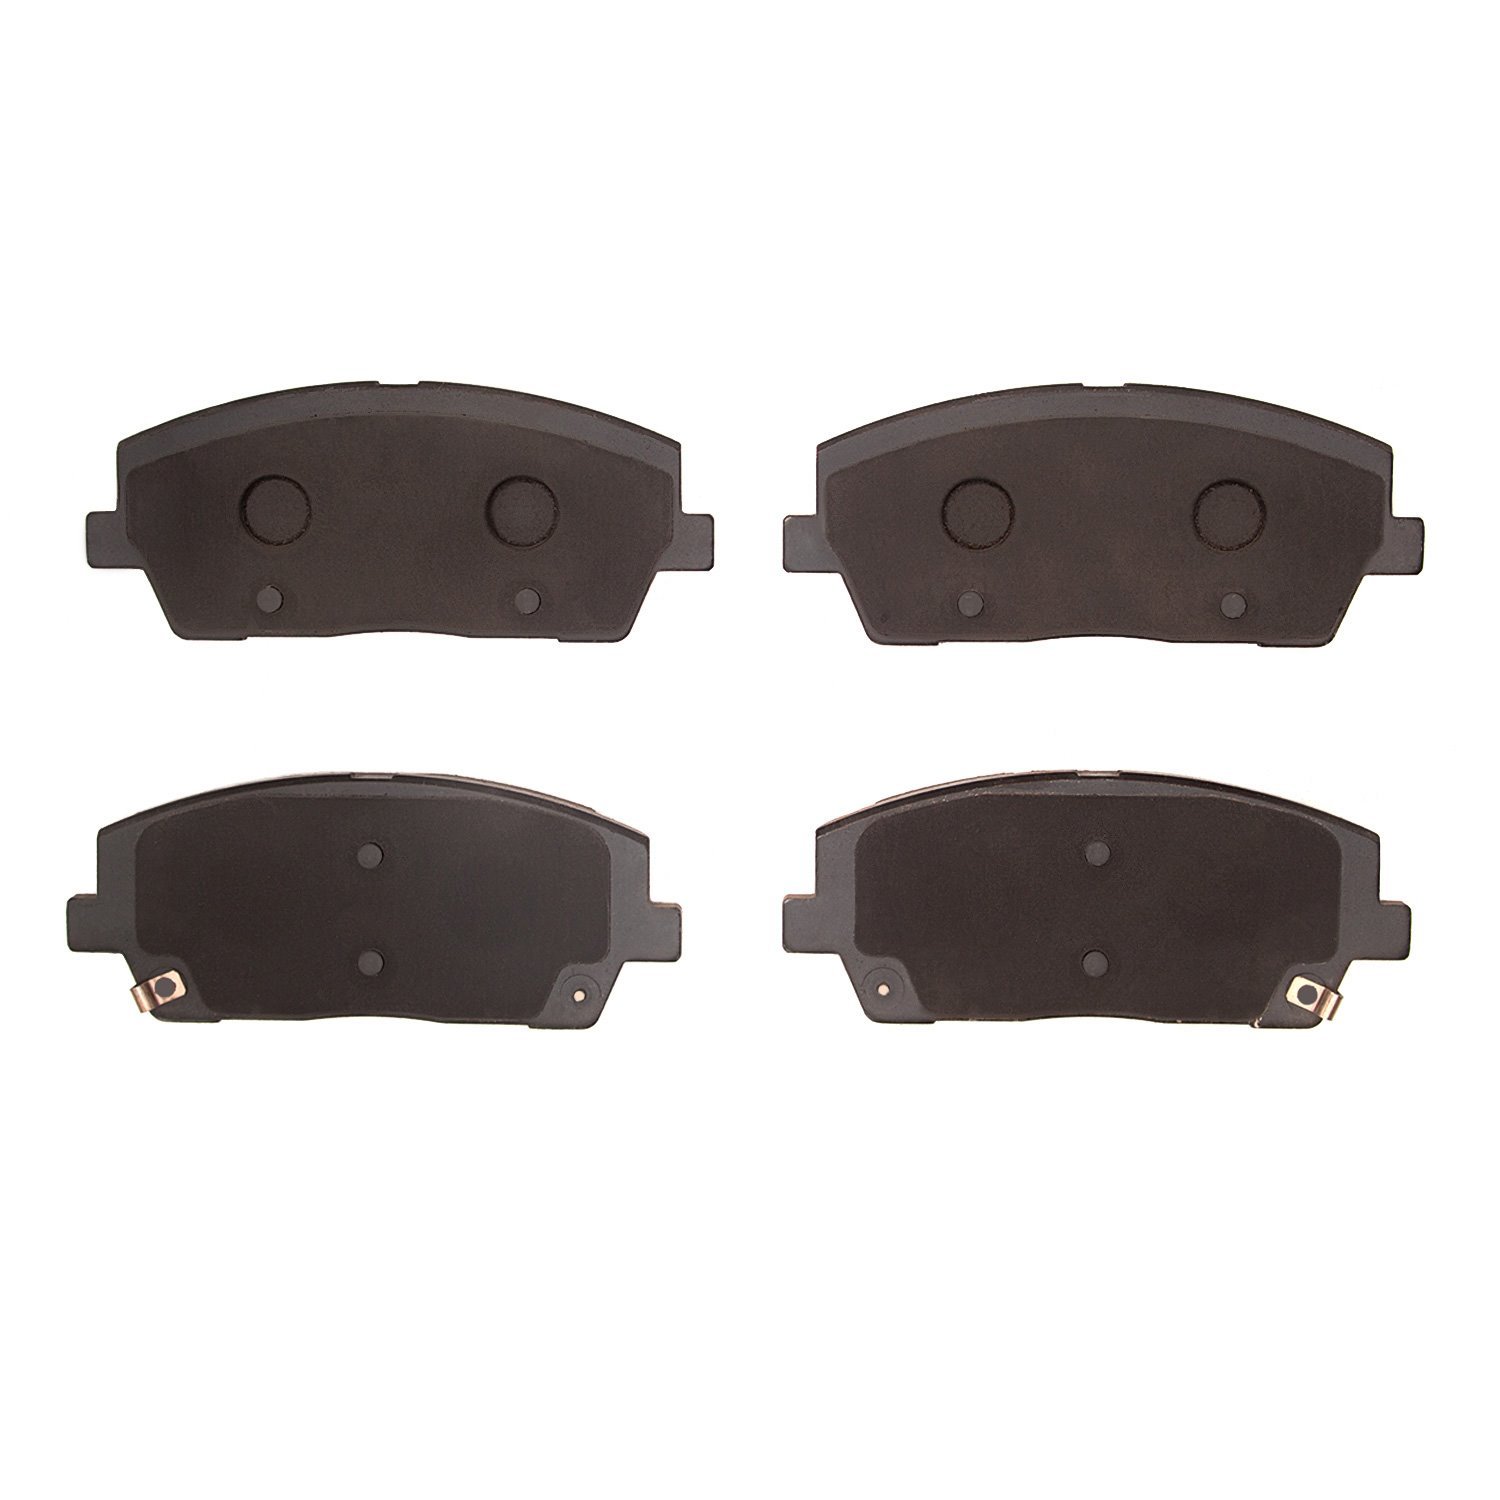 1551-2215-00 5000 Advanced Ceramic Brake Pads, Fits Select Kia/Hyundai/Genesis, Position: Front